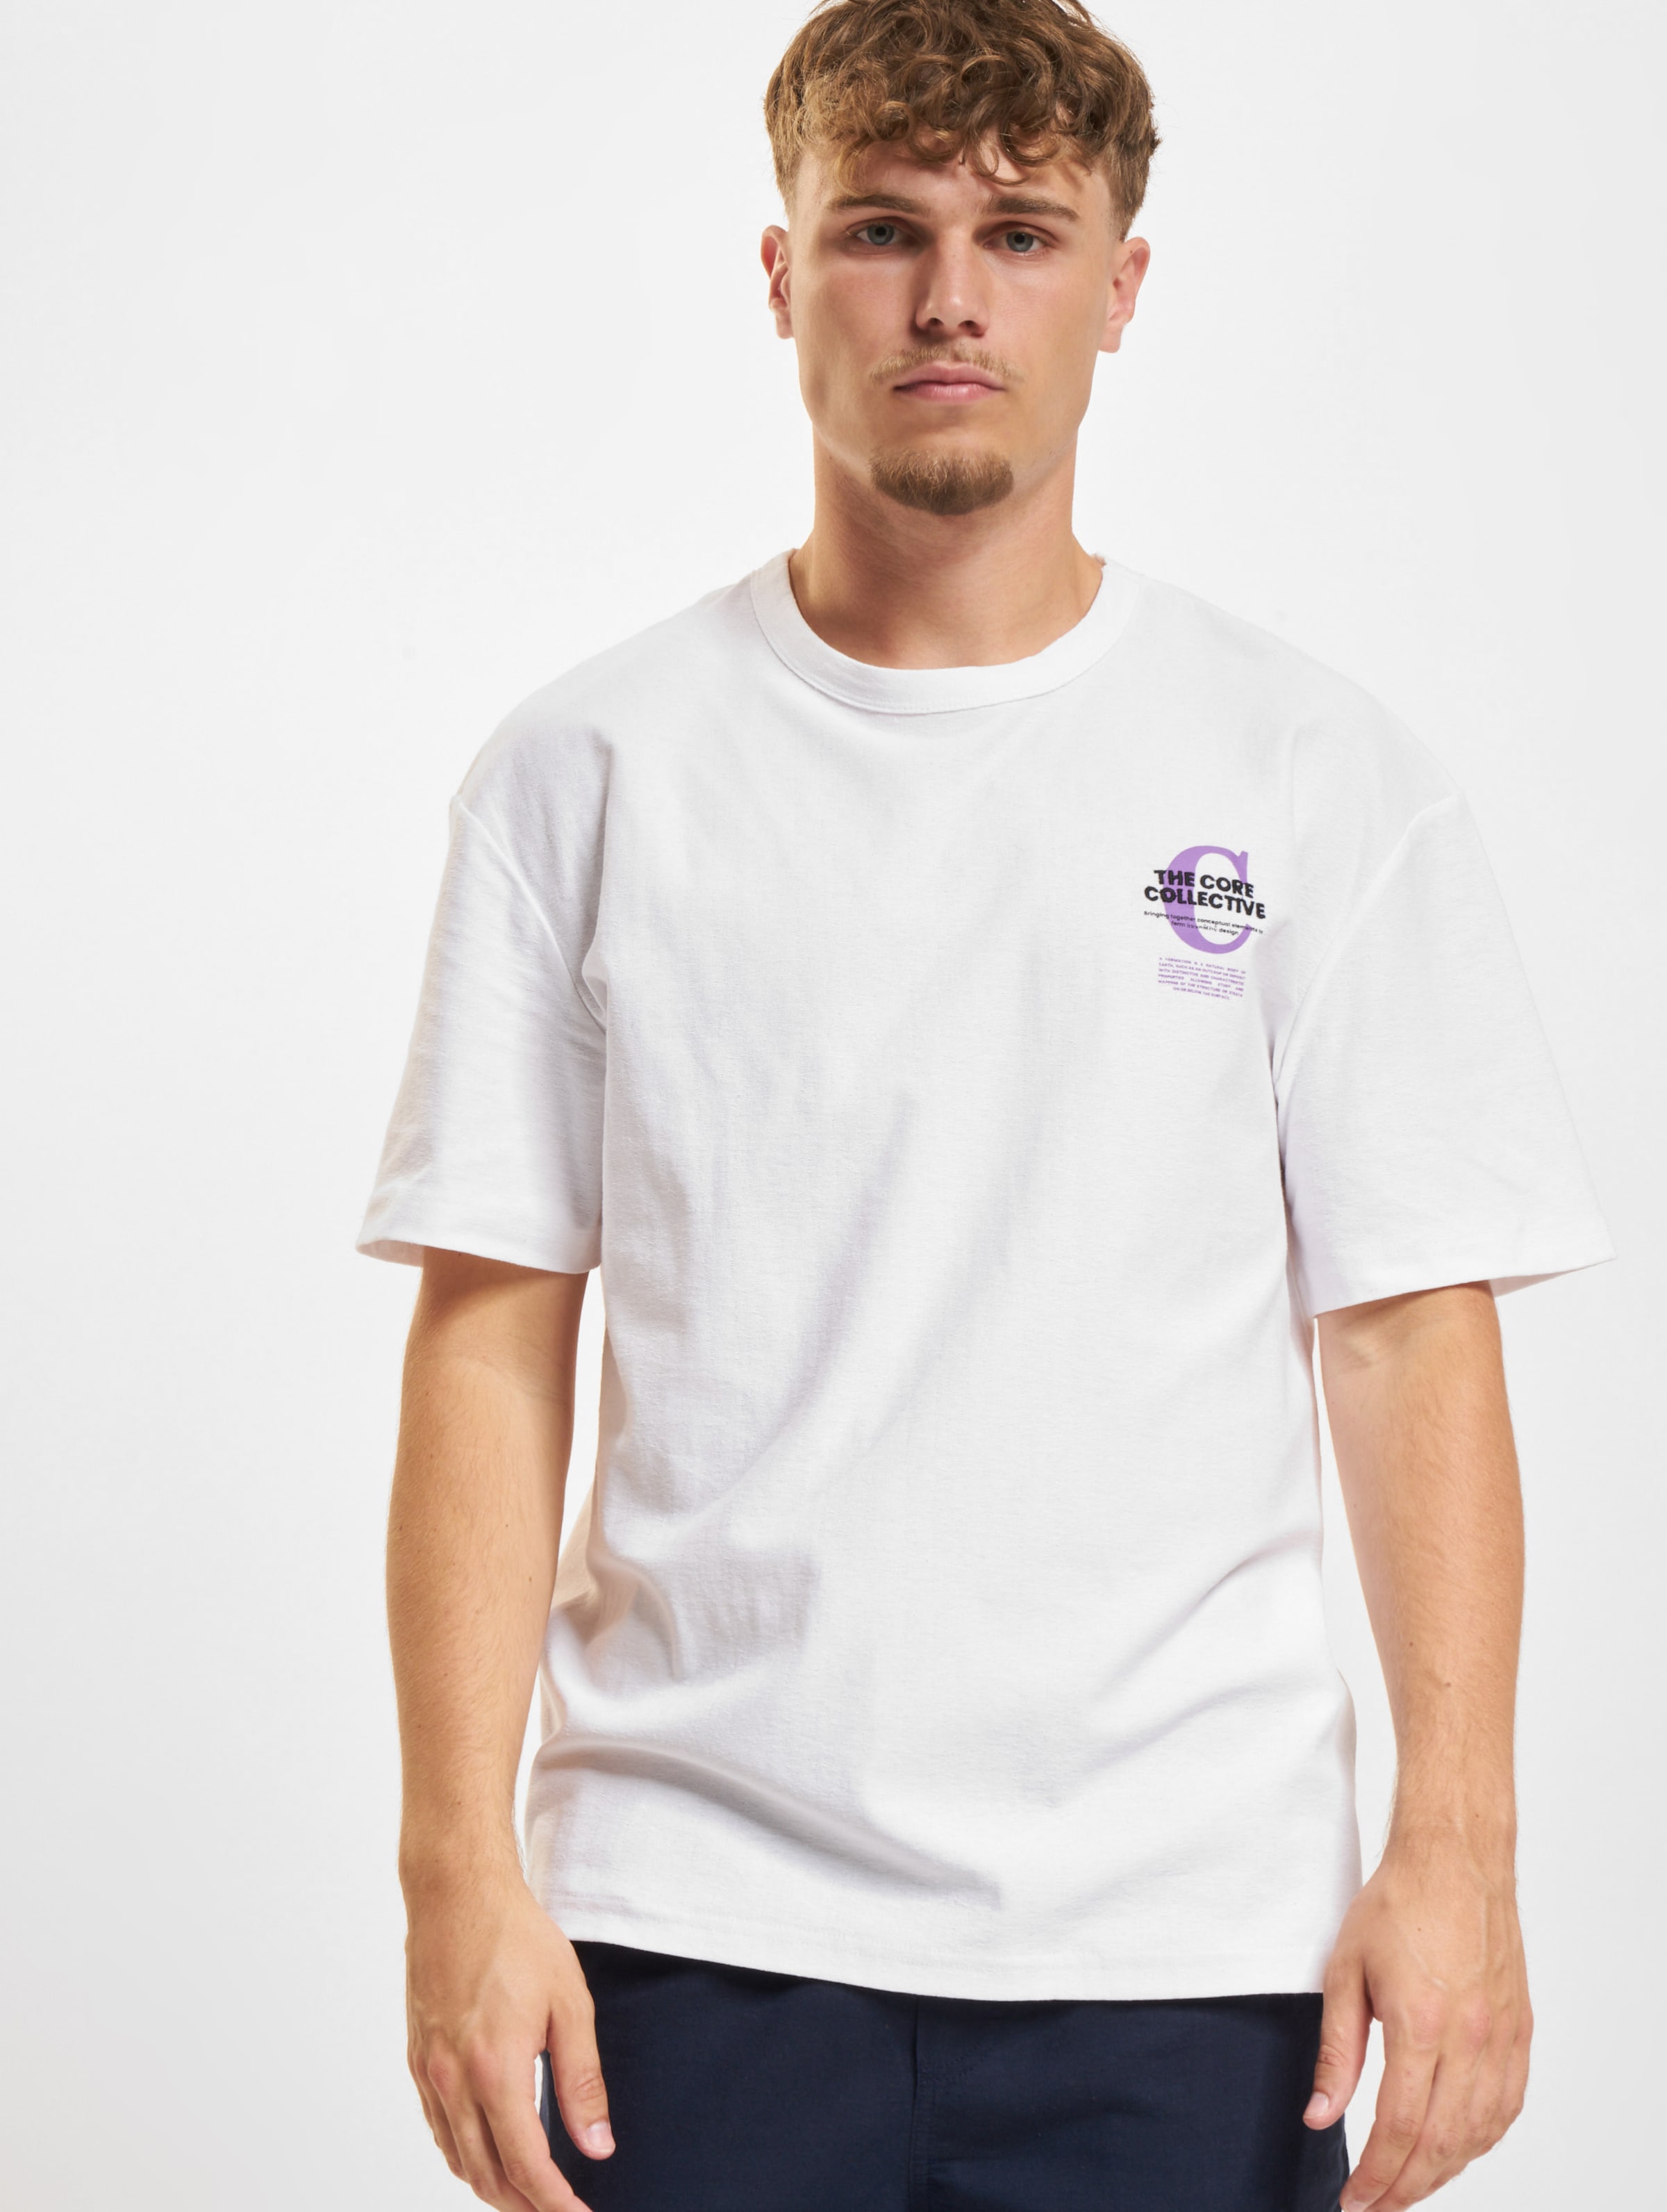 Jack & Jones Holger Crew Neck T-Shirts Männer,Unisex op kleur wit, Maat XXL